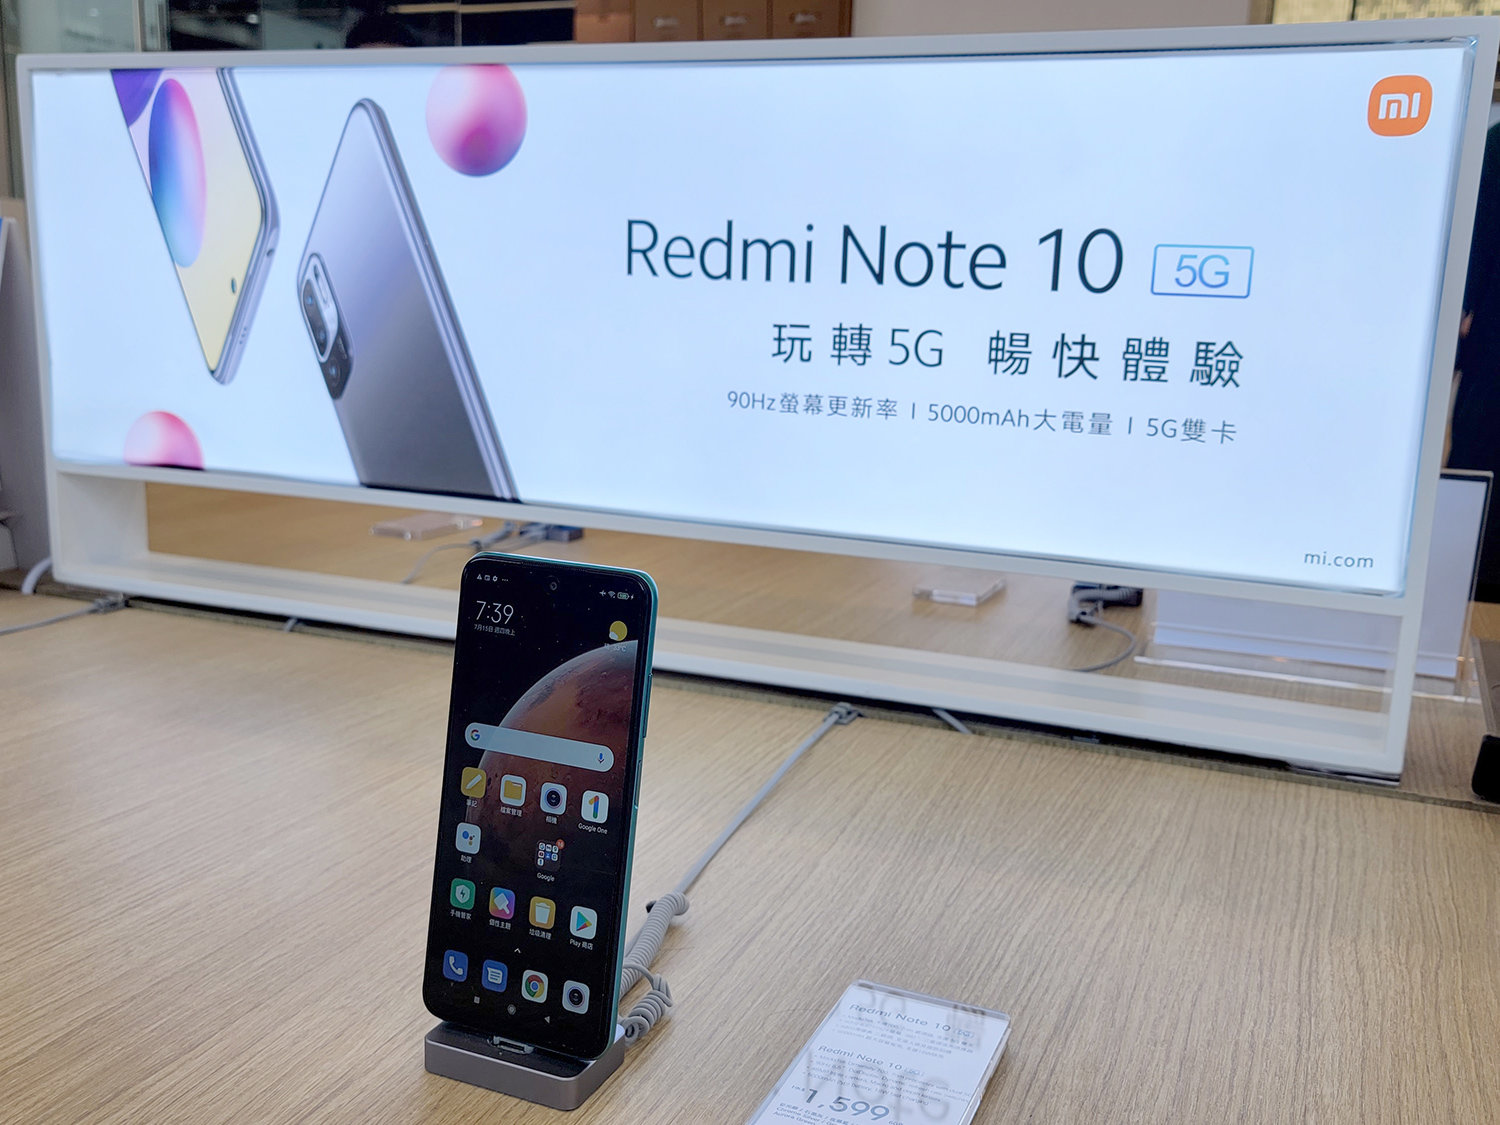 Xiaomi「Redmi Note 10 JE」の海外向けベースモデルは激安5Gスマホ ...